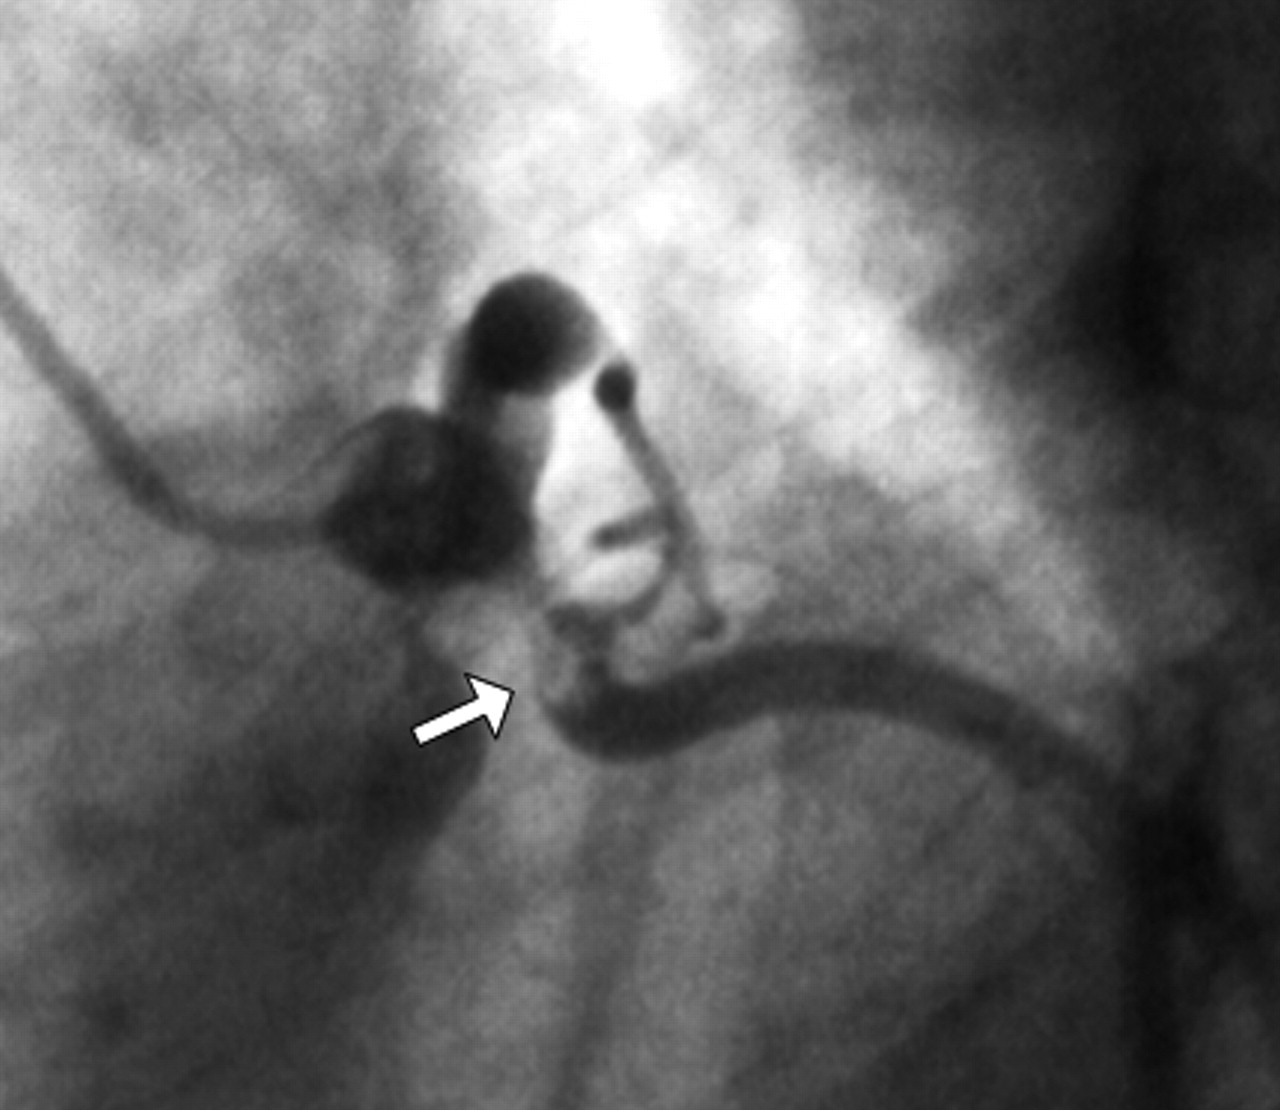 Velsigne Blot Slutning A case of myocardial infarction complicating Kawasaki disease | CMAJ